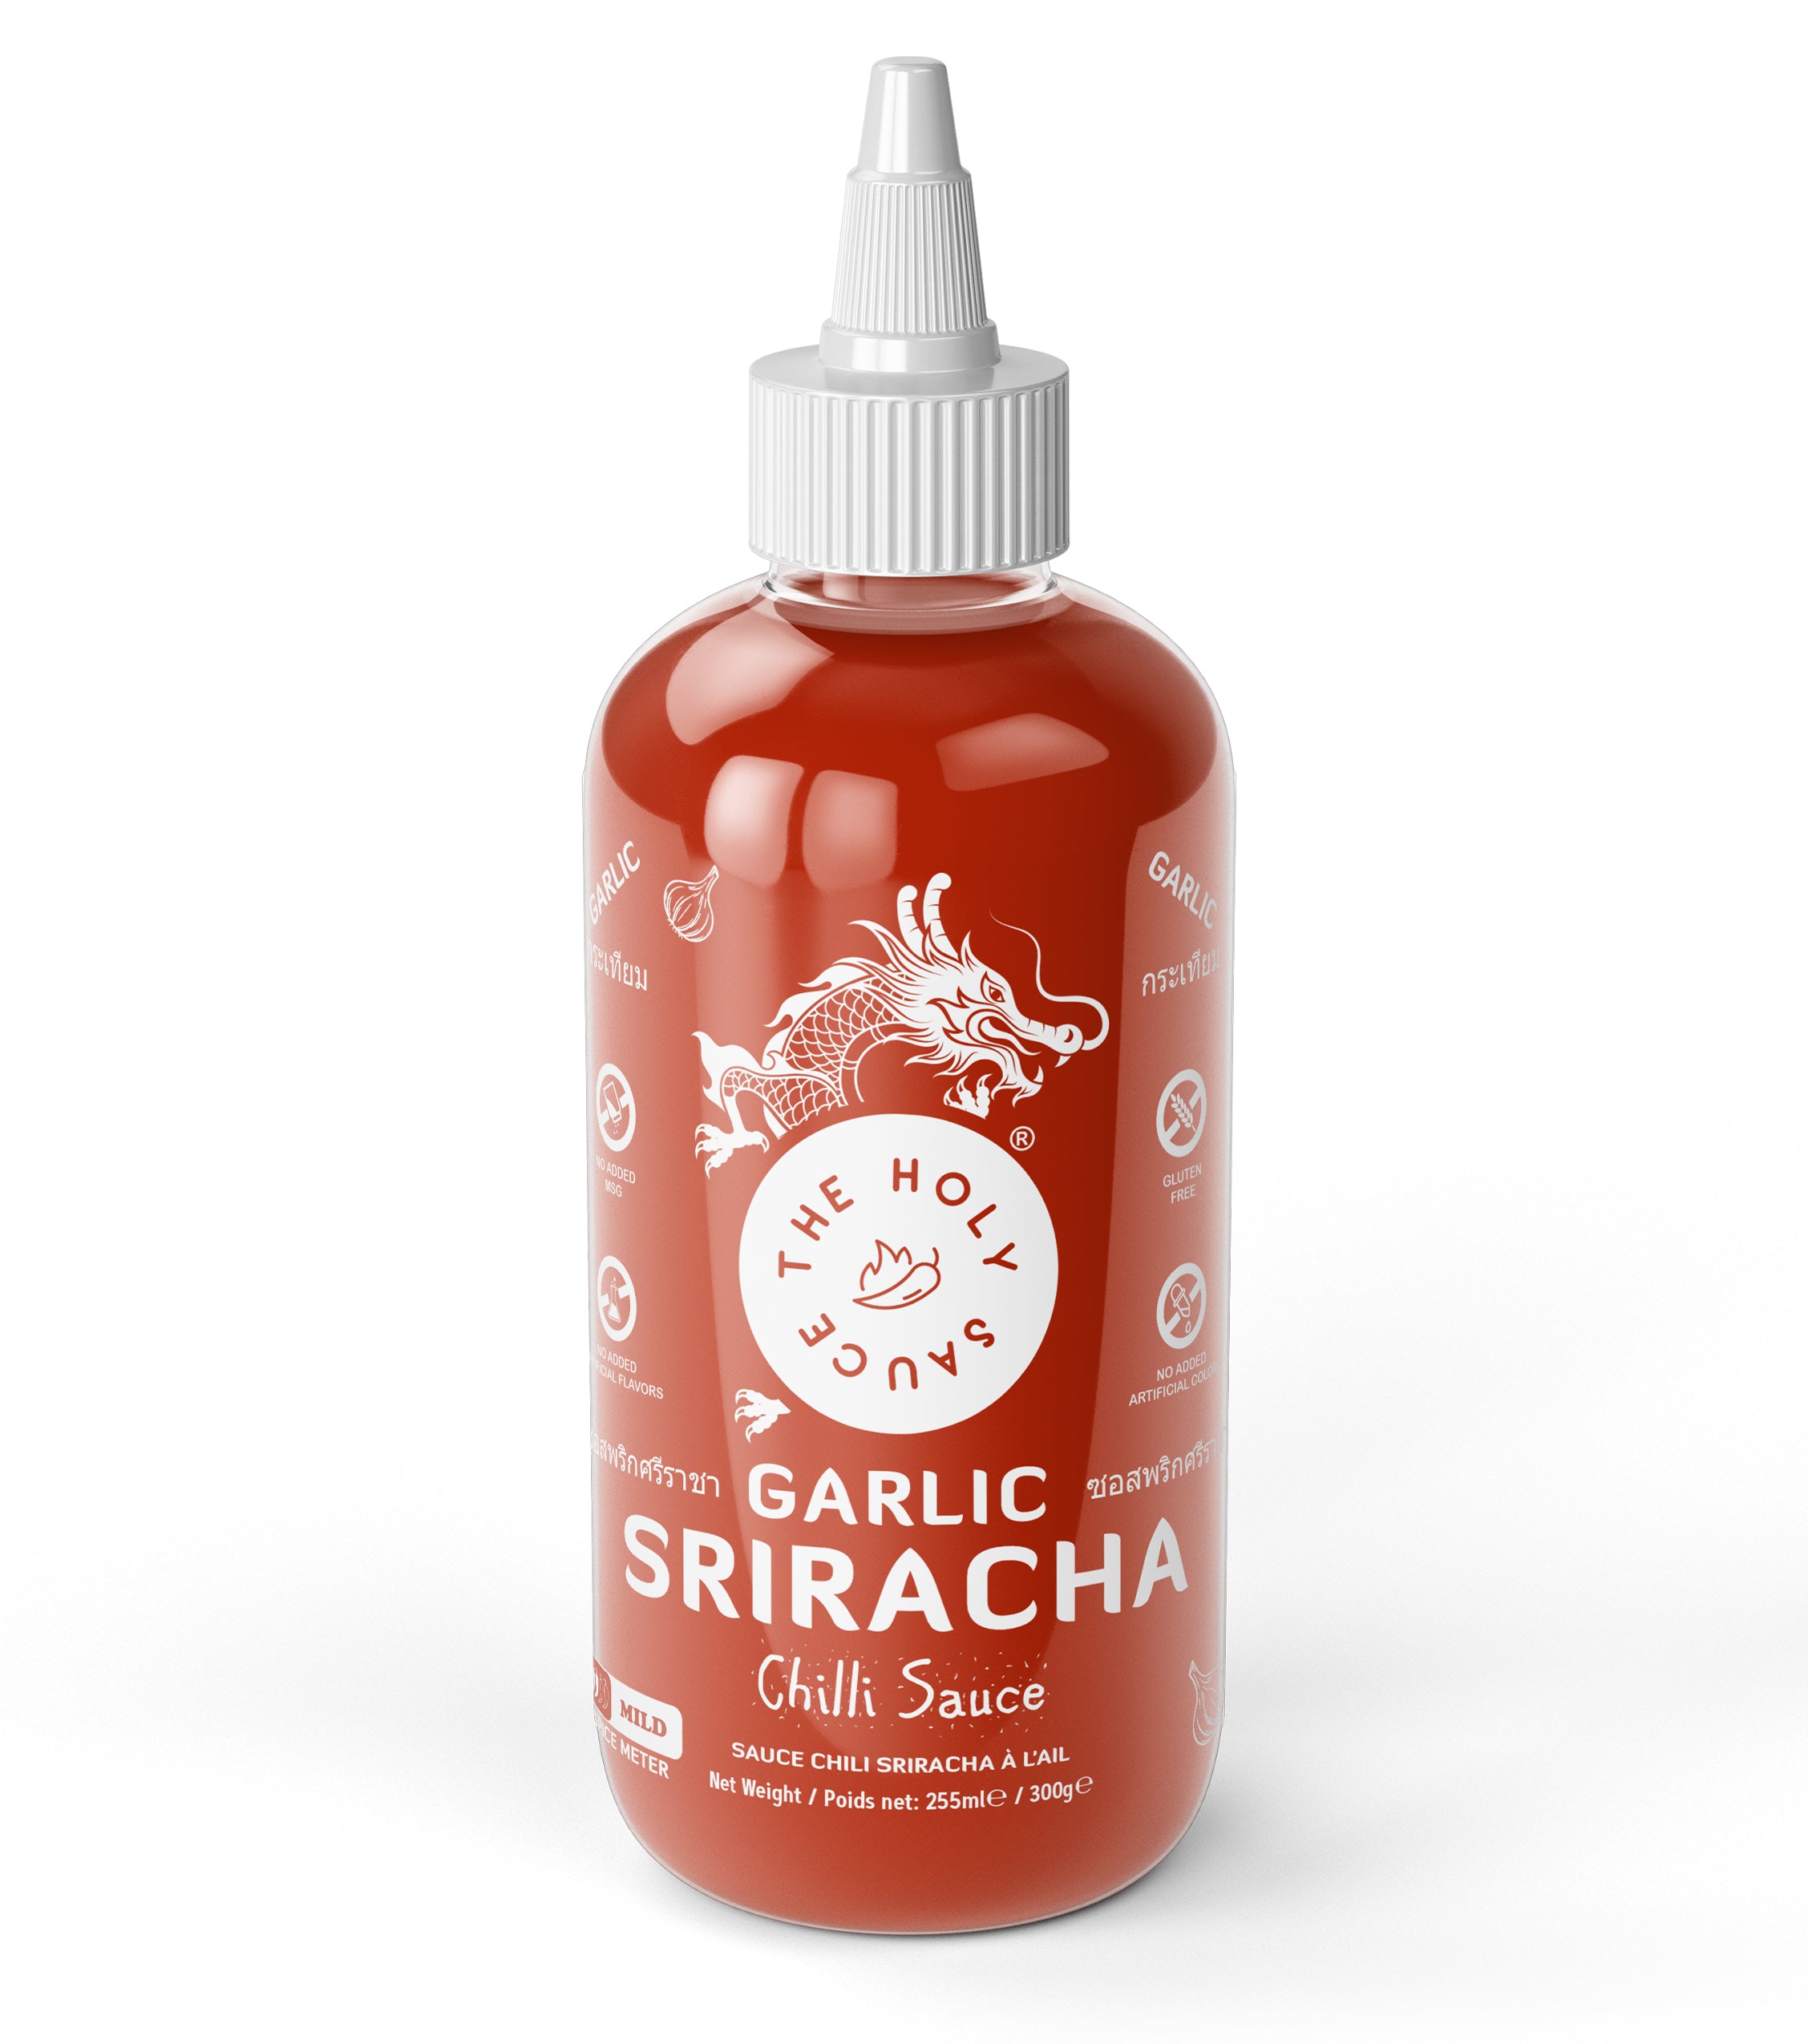 HOLY SAUCE Sriracha Chili Sauce Garlic 300g